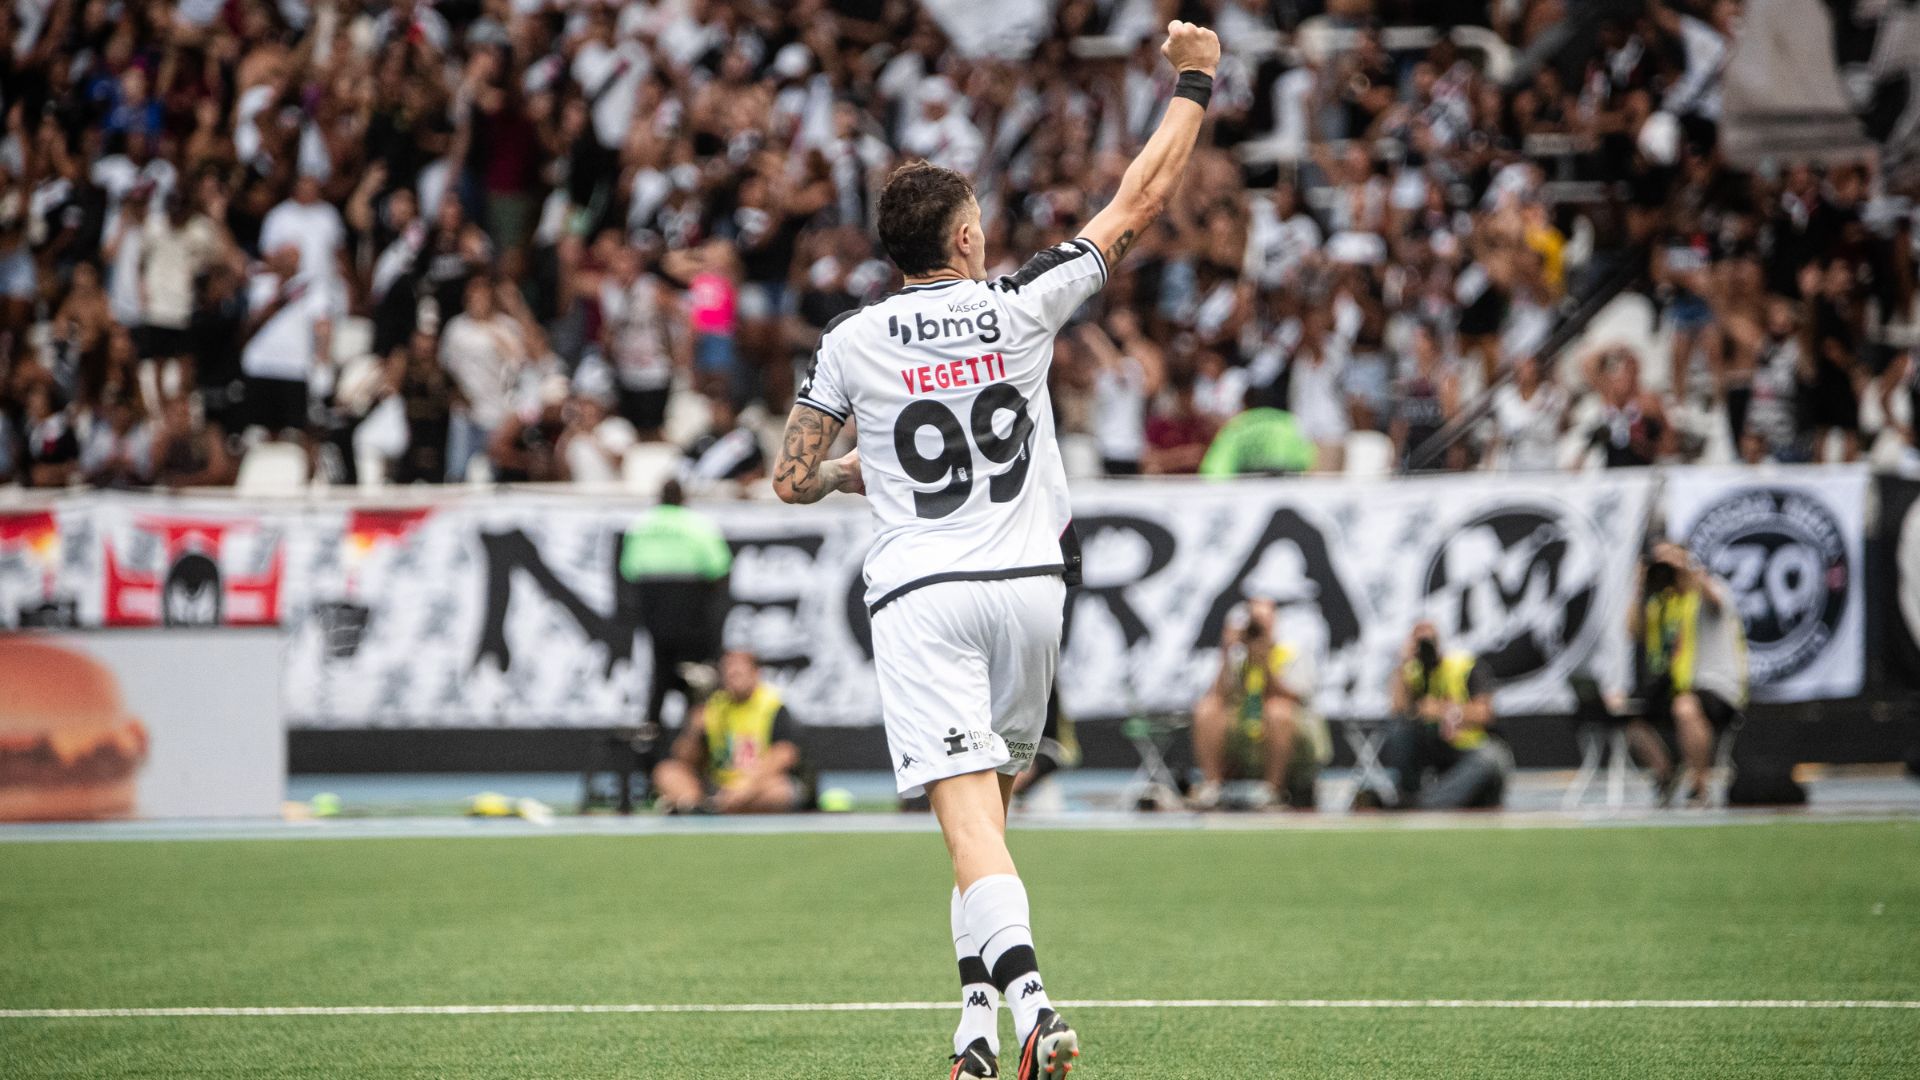 Vegetti comemorando gol pelo Vasco (Crédito: Leandro Amorim / Vasco)